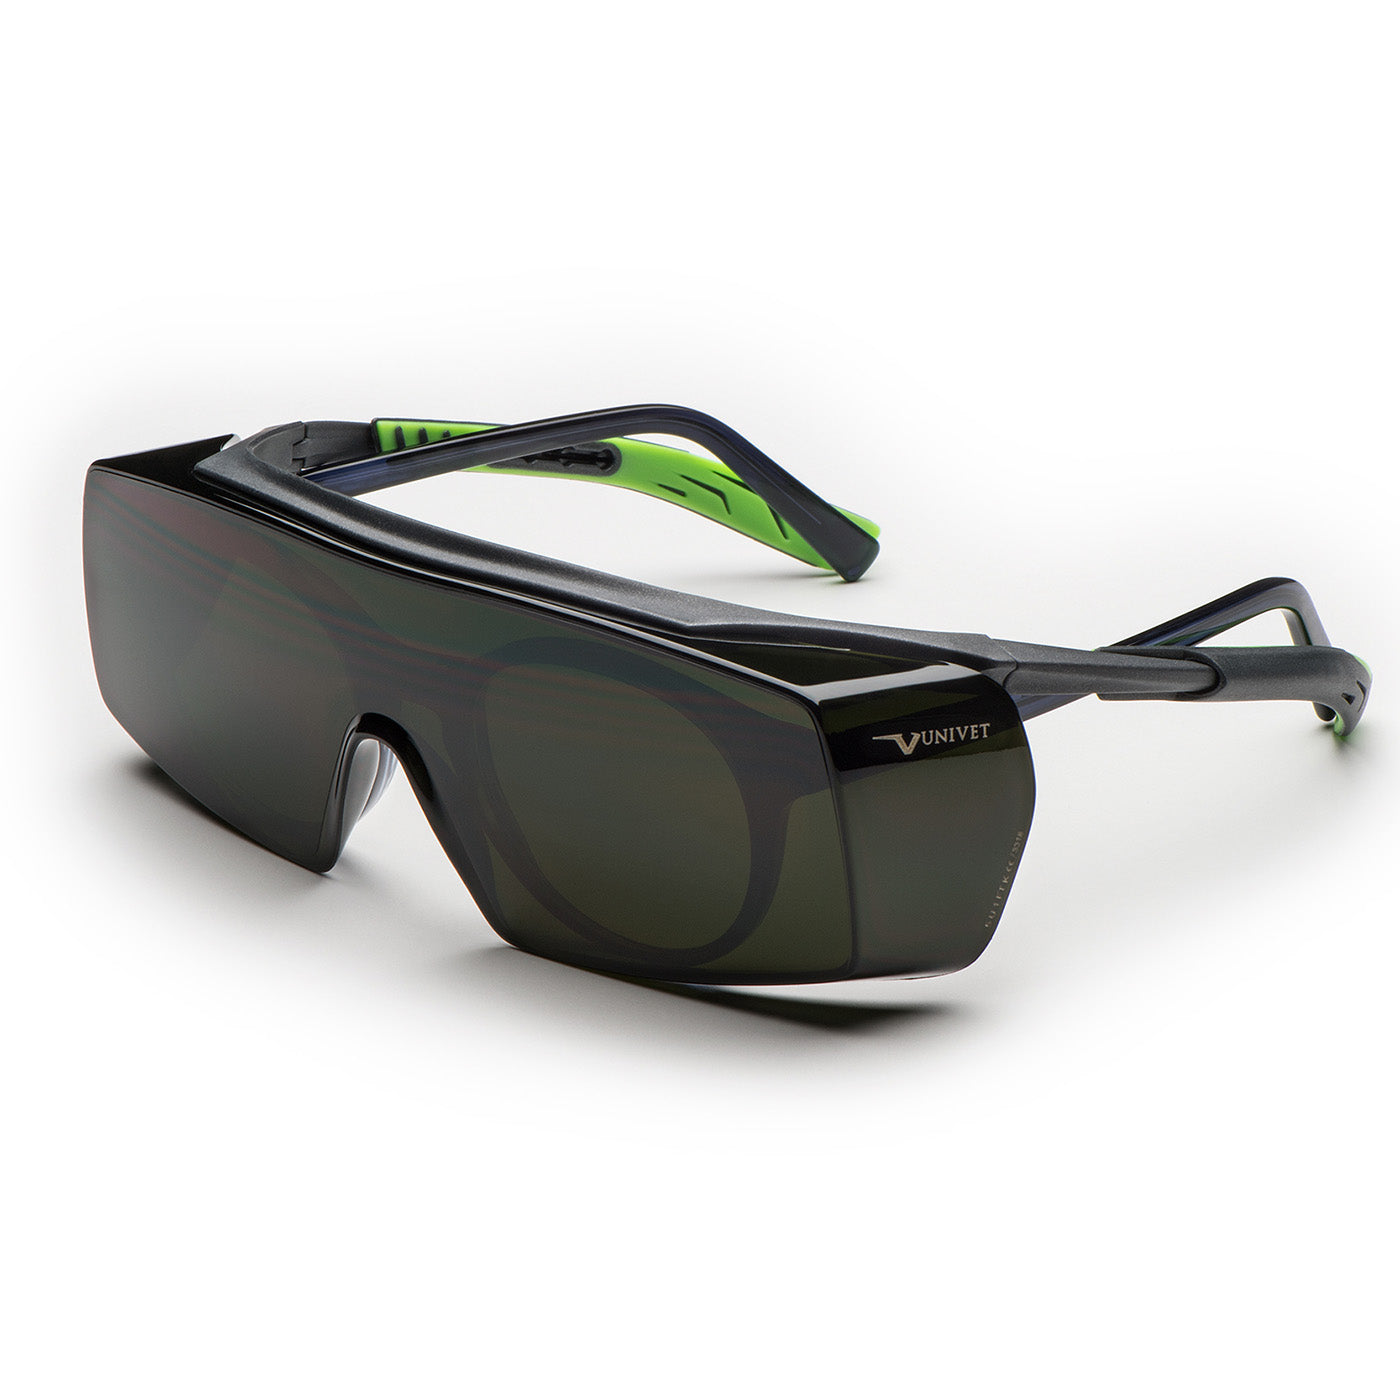 Univet 5X7 OTG Welding Shad 5 Safety Glasses - 5X7.01.11.50